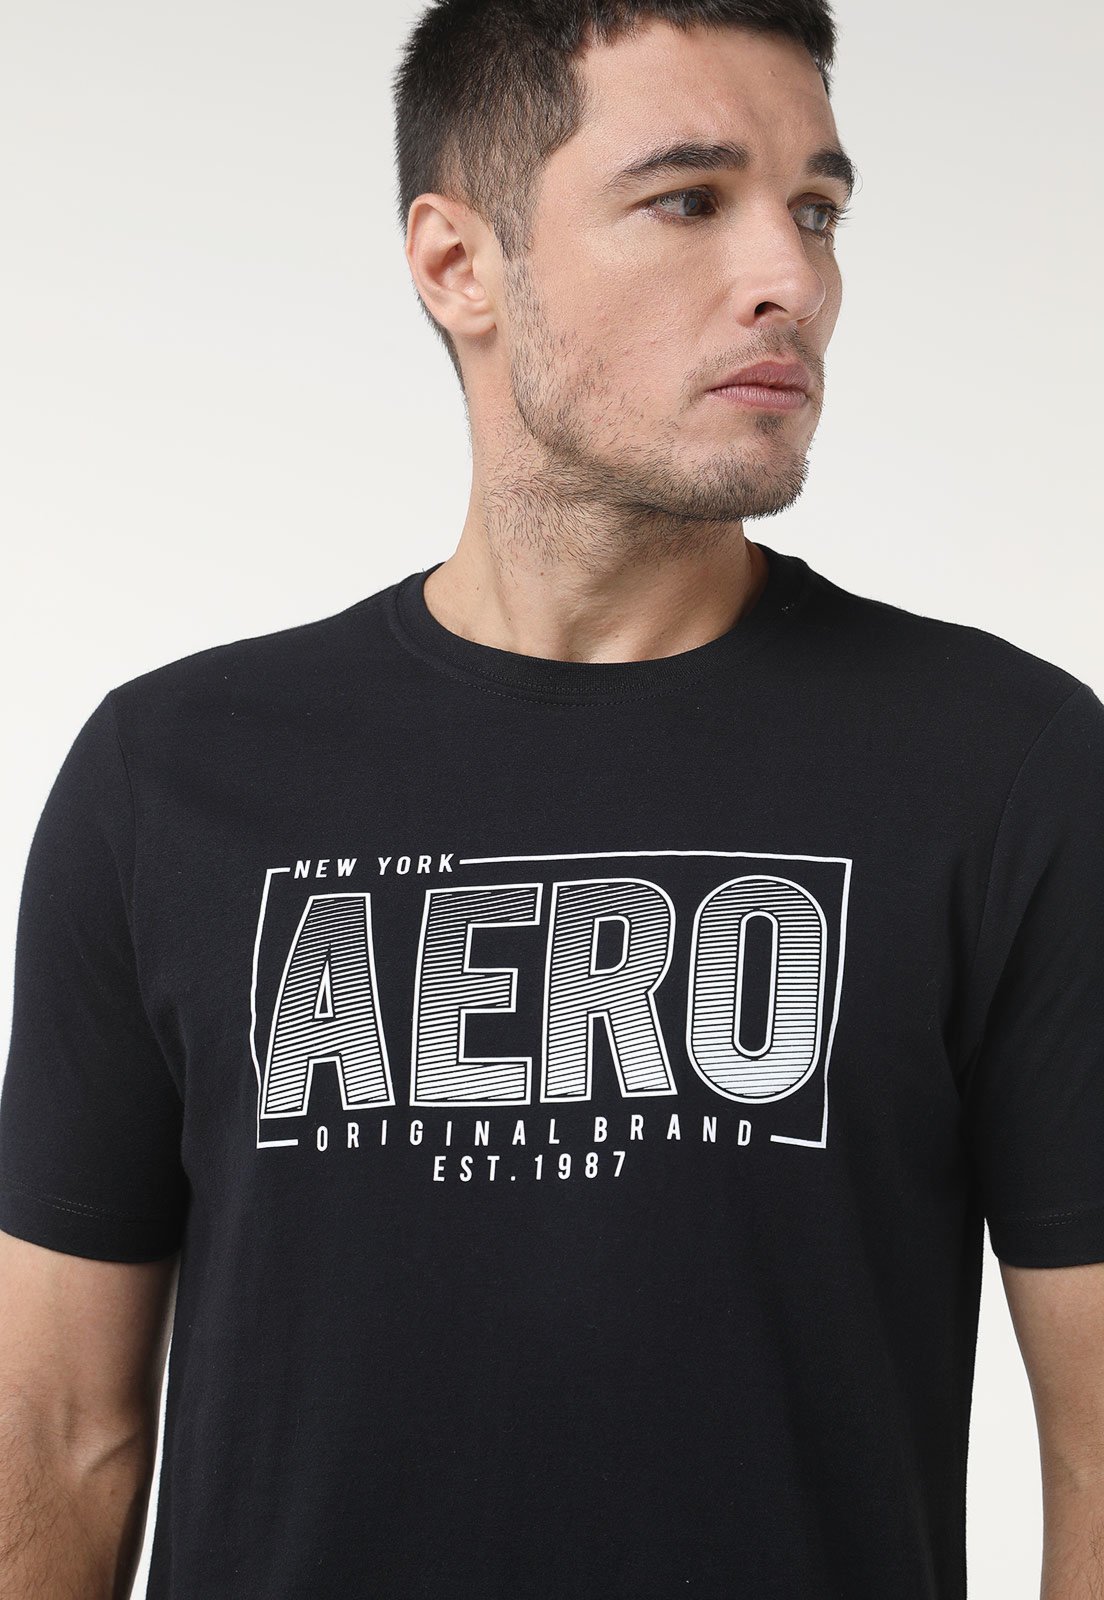 Camiseta Aeropostale Logo Preta - Compre Agora